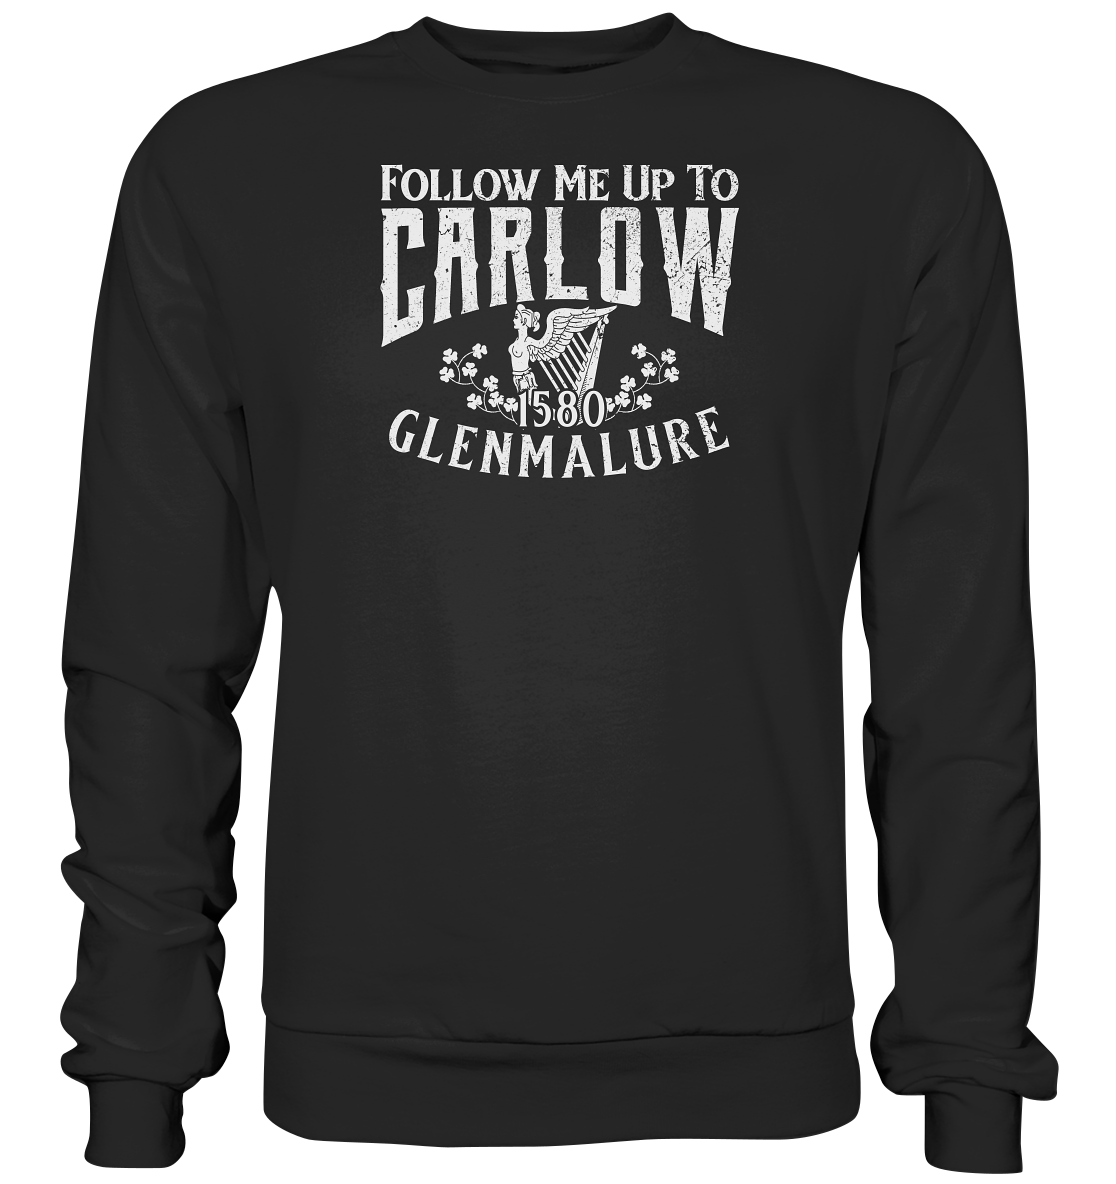 Follow Me Up To Carlow - Premium Sweatshirt